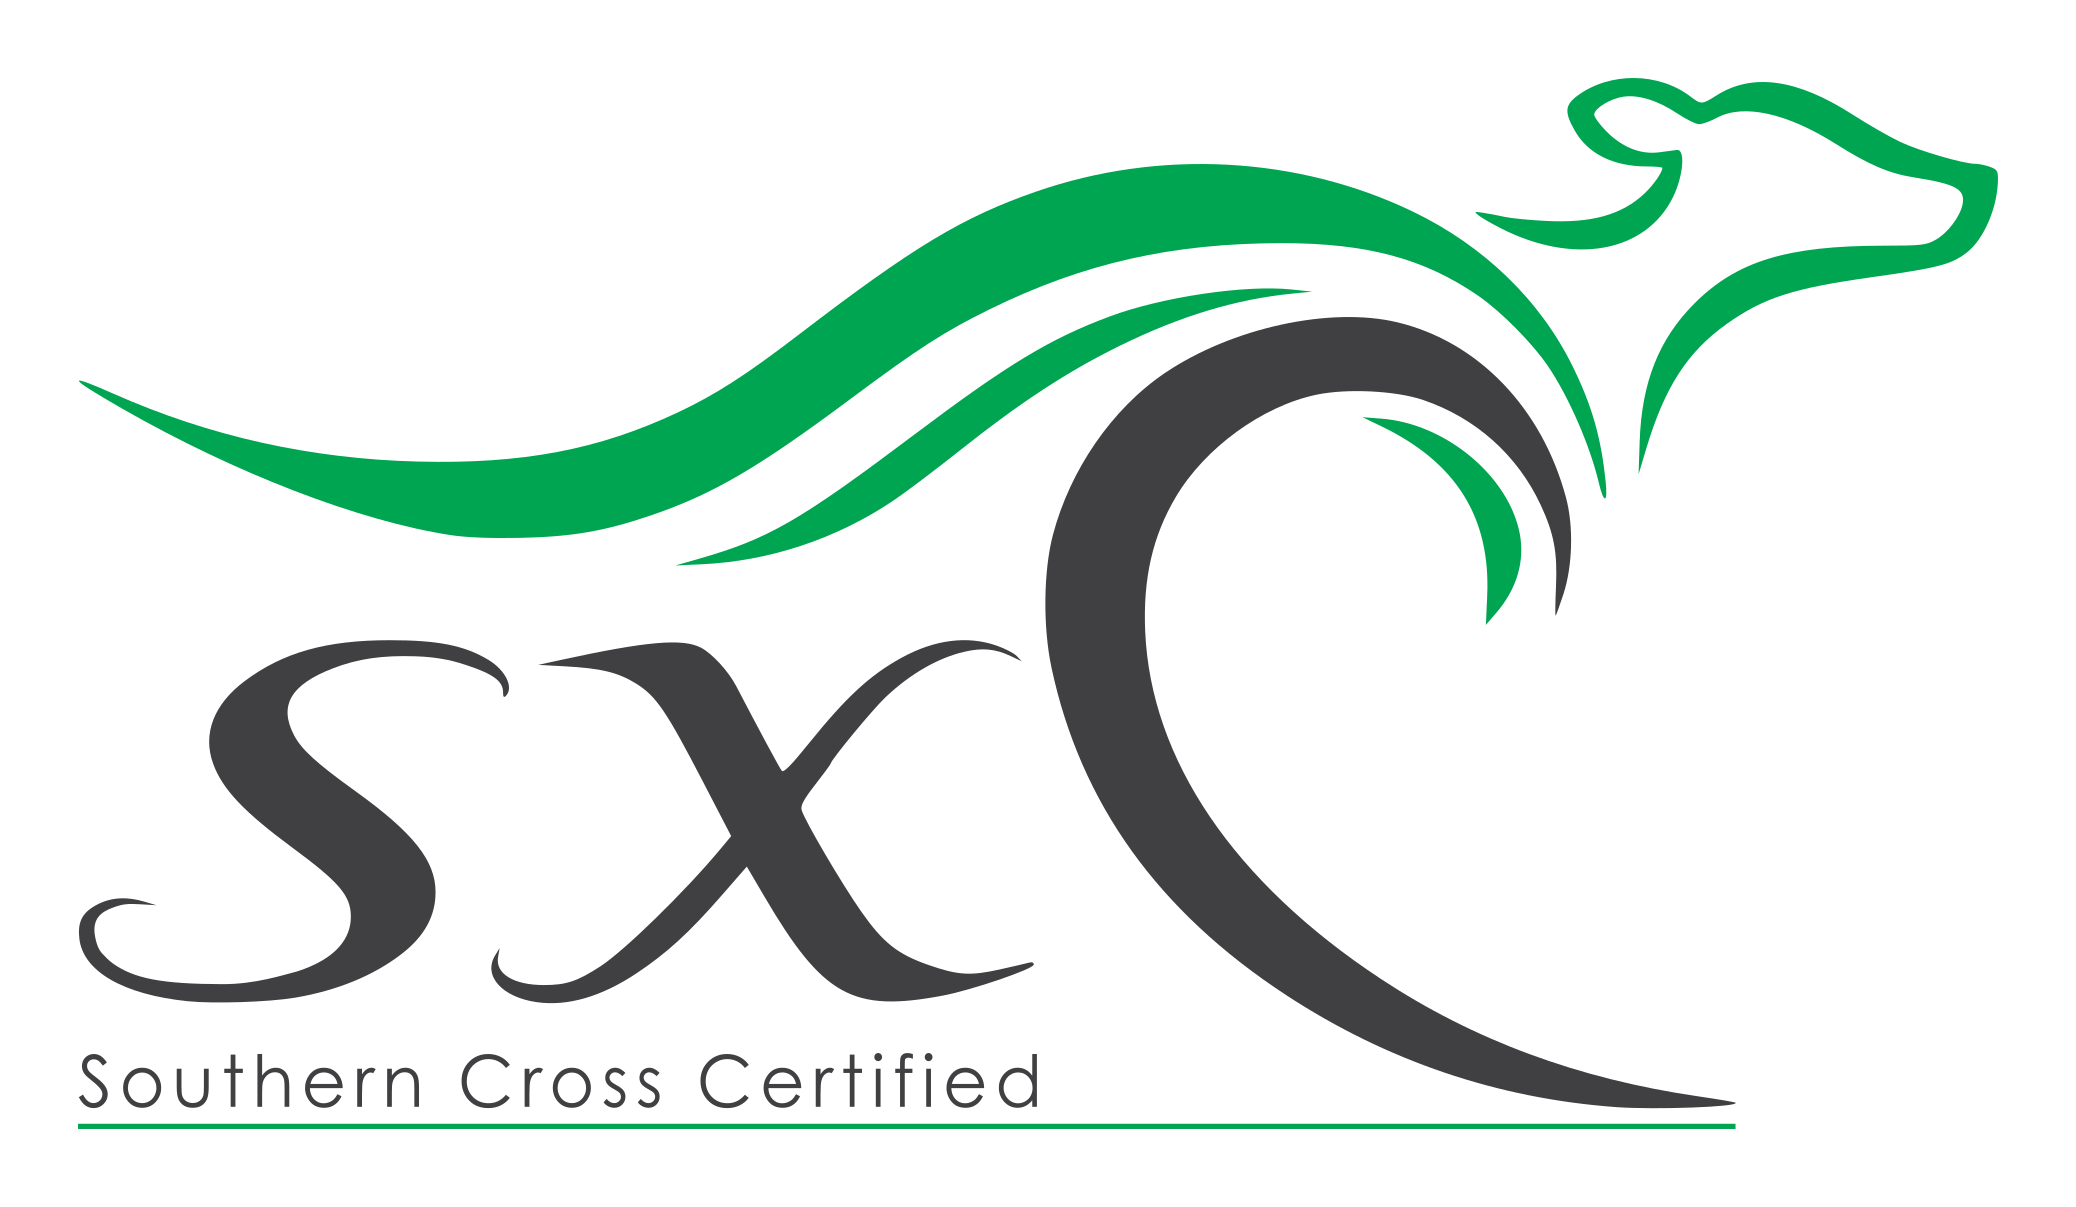 Southern Cross Certified